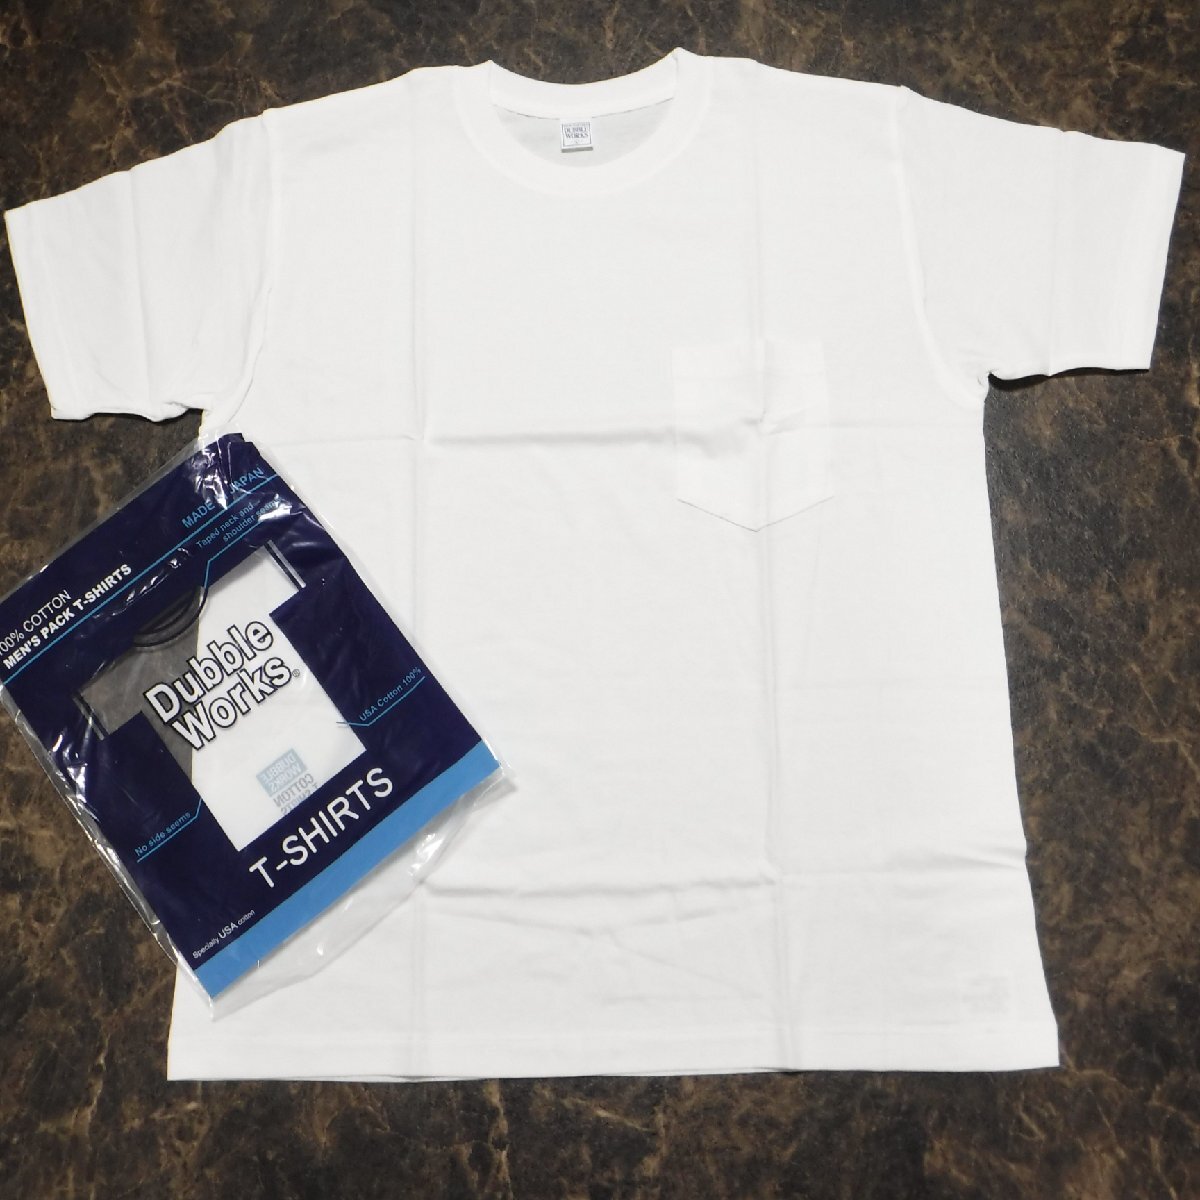 TT358 ウエアハウス ダブルワークス 新品 白 胸ポケット付き 半袖Tシャツ L(40-42) 日本製 丸胴 無地 USAコットン DUBBLEWORKS_画像1